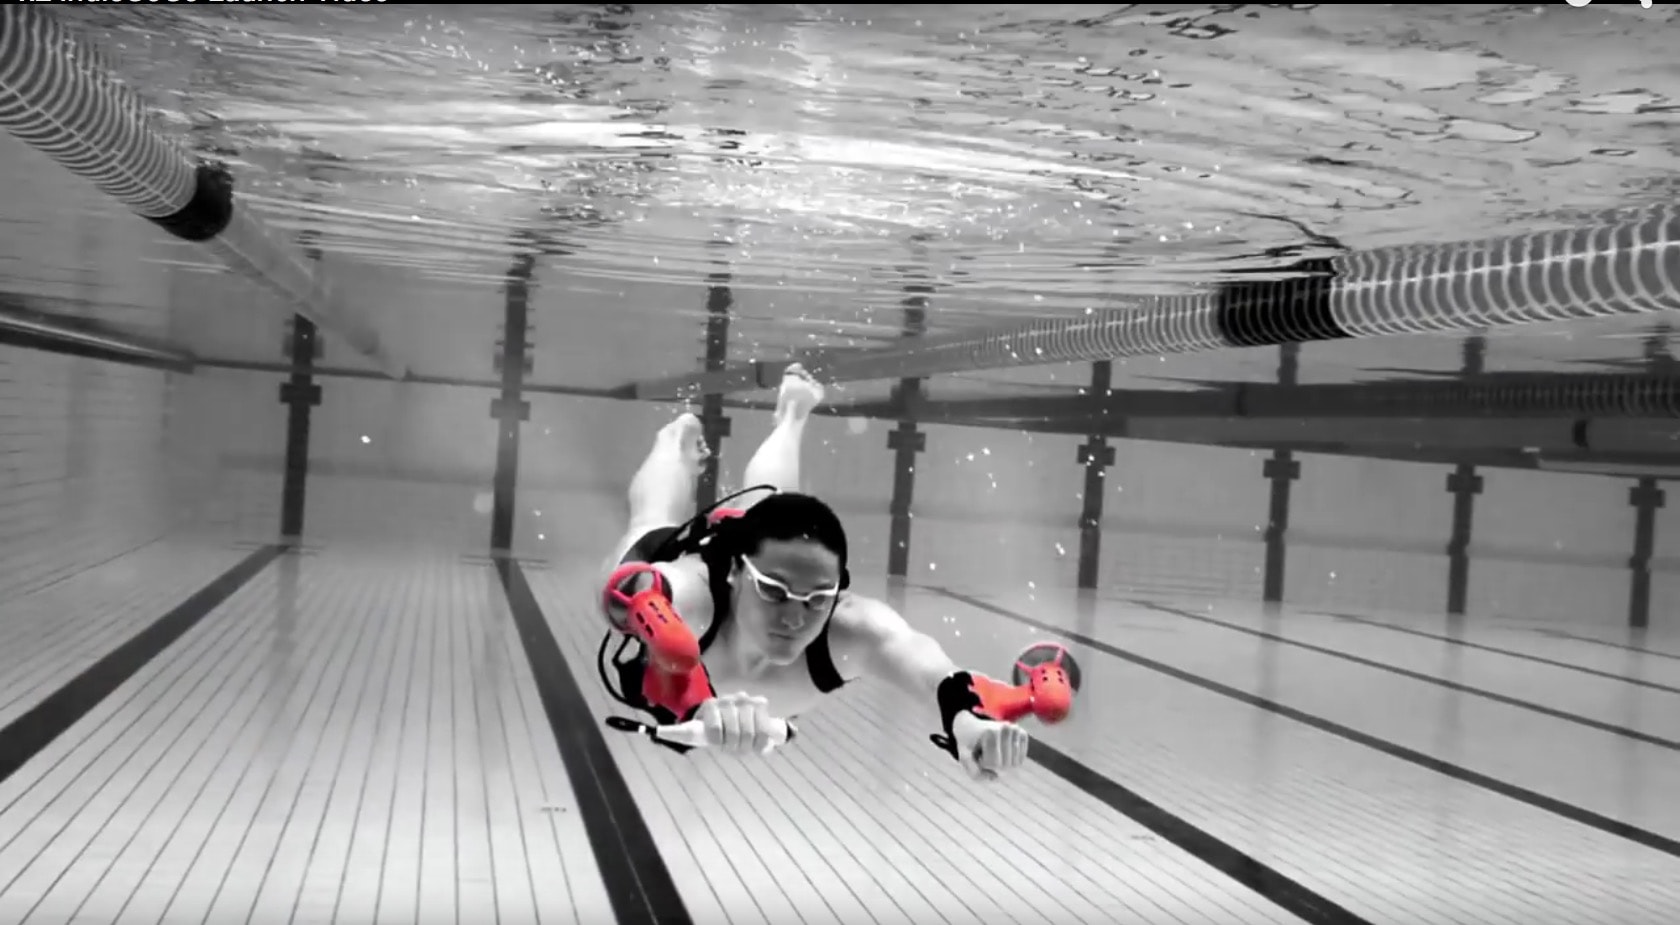 https://s1.cdn.autoevolution.com/images/news/worlds-first-wearable-underwater-jetpack-is-better-than-a-yacht-video-100611_1.jpg